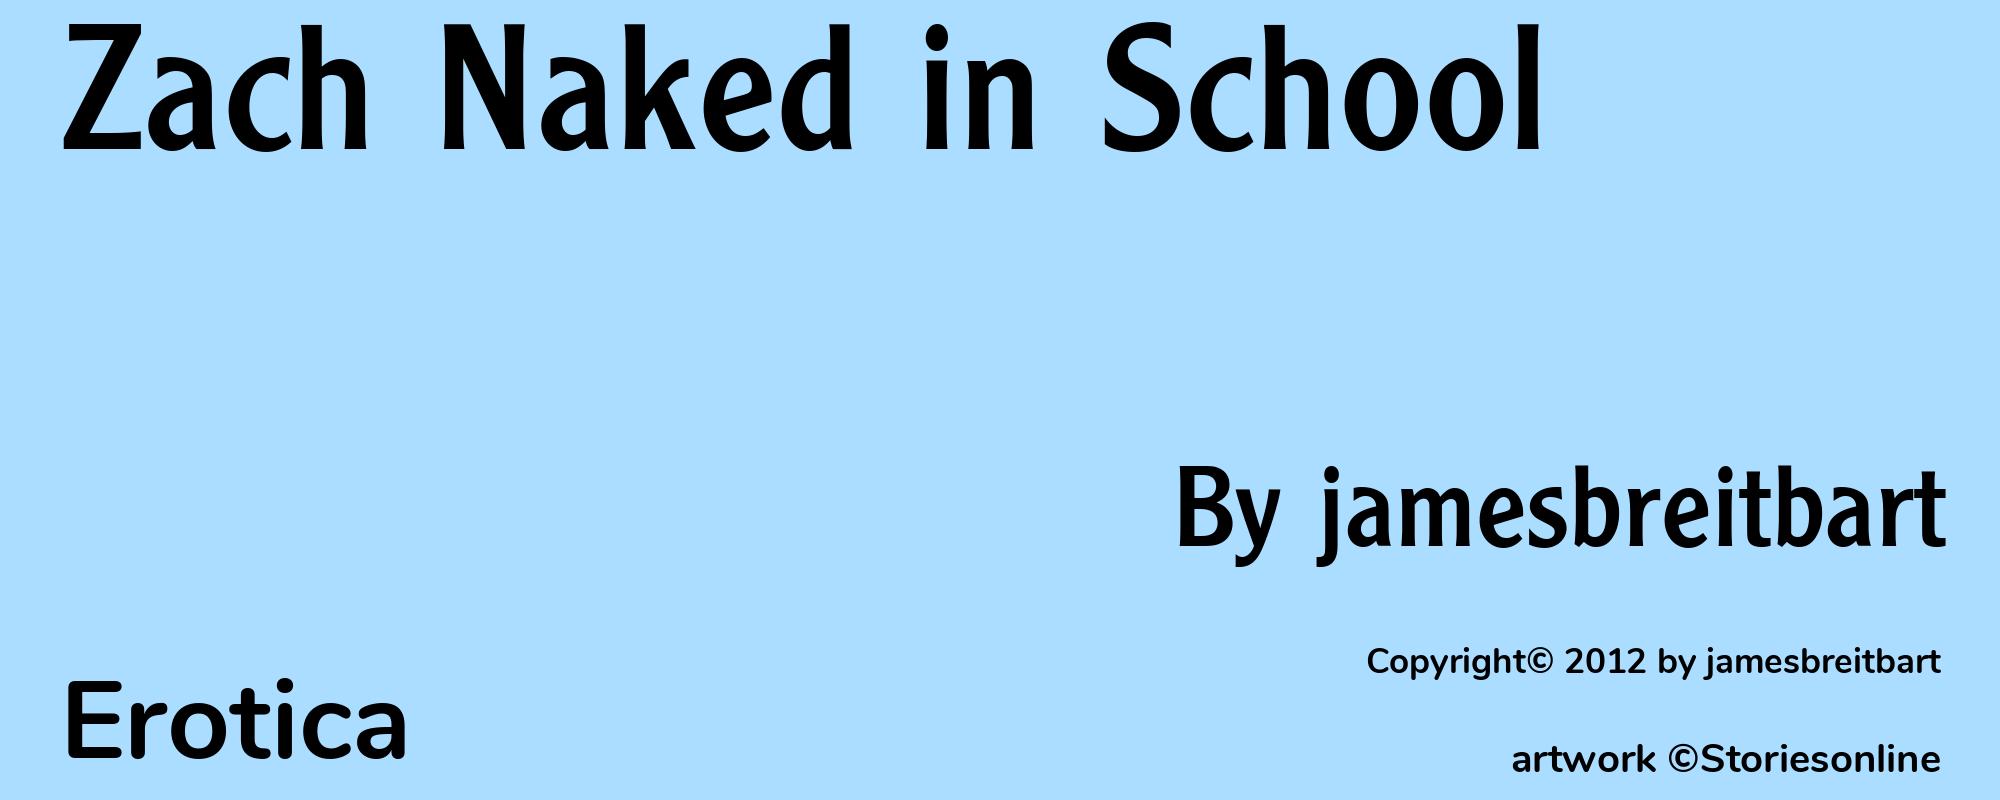 Zach Naked in School - Cover